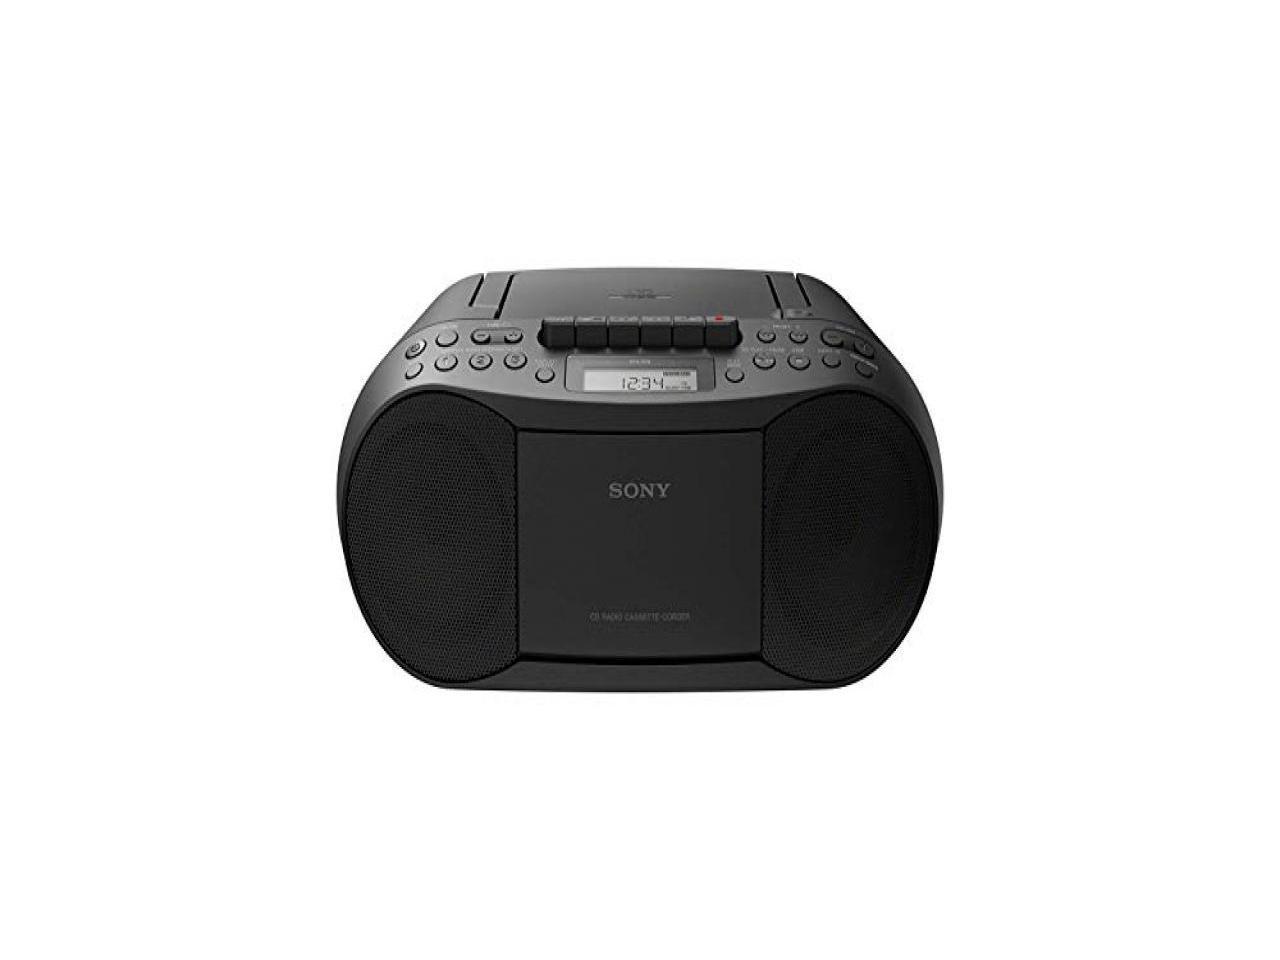 Sony CFDS BLK CD MP Cassette Boombox Home Audio Radio Black Newegg Com